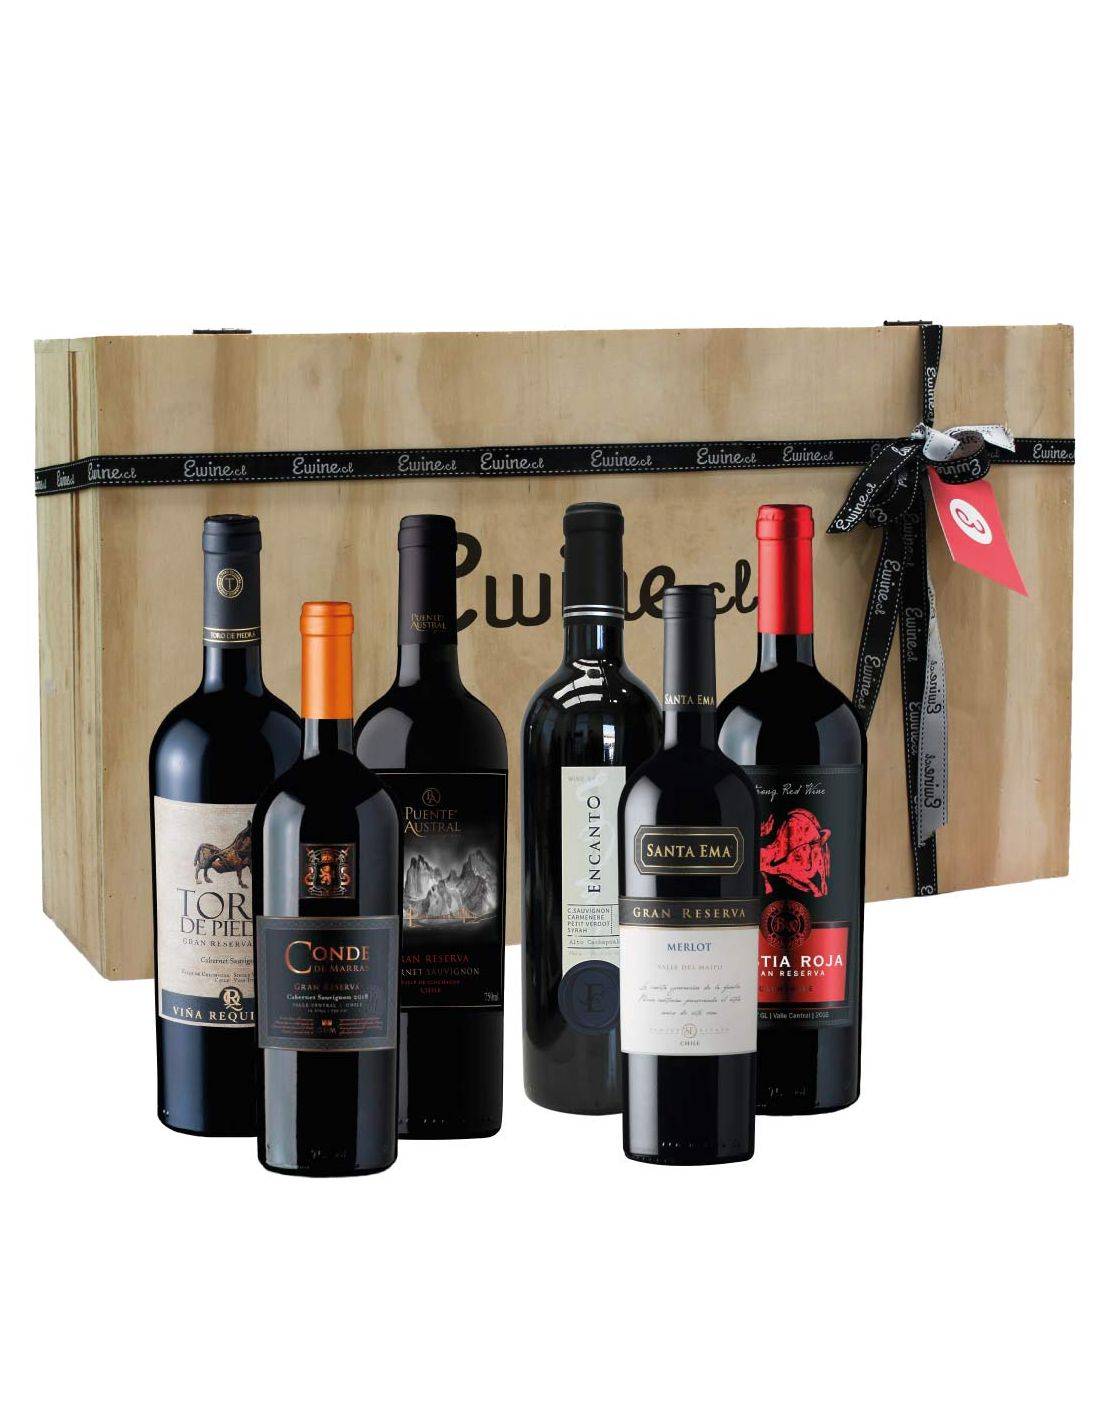 Corte abuela imagen Maleta 6 vinos mix tintos Gran Reserva - Premium en Oferta